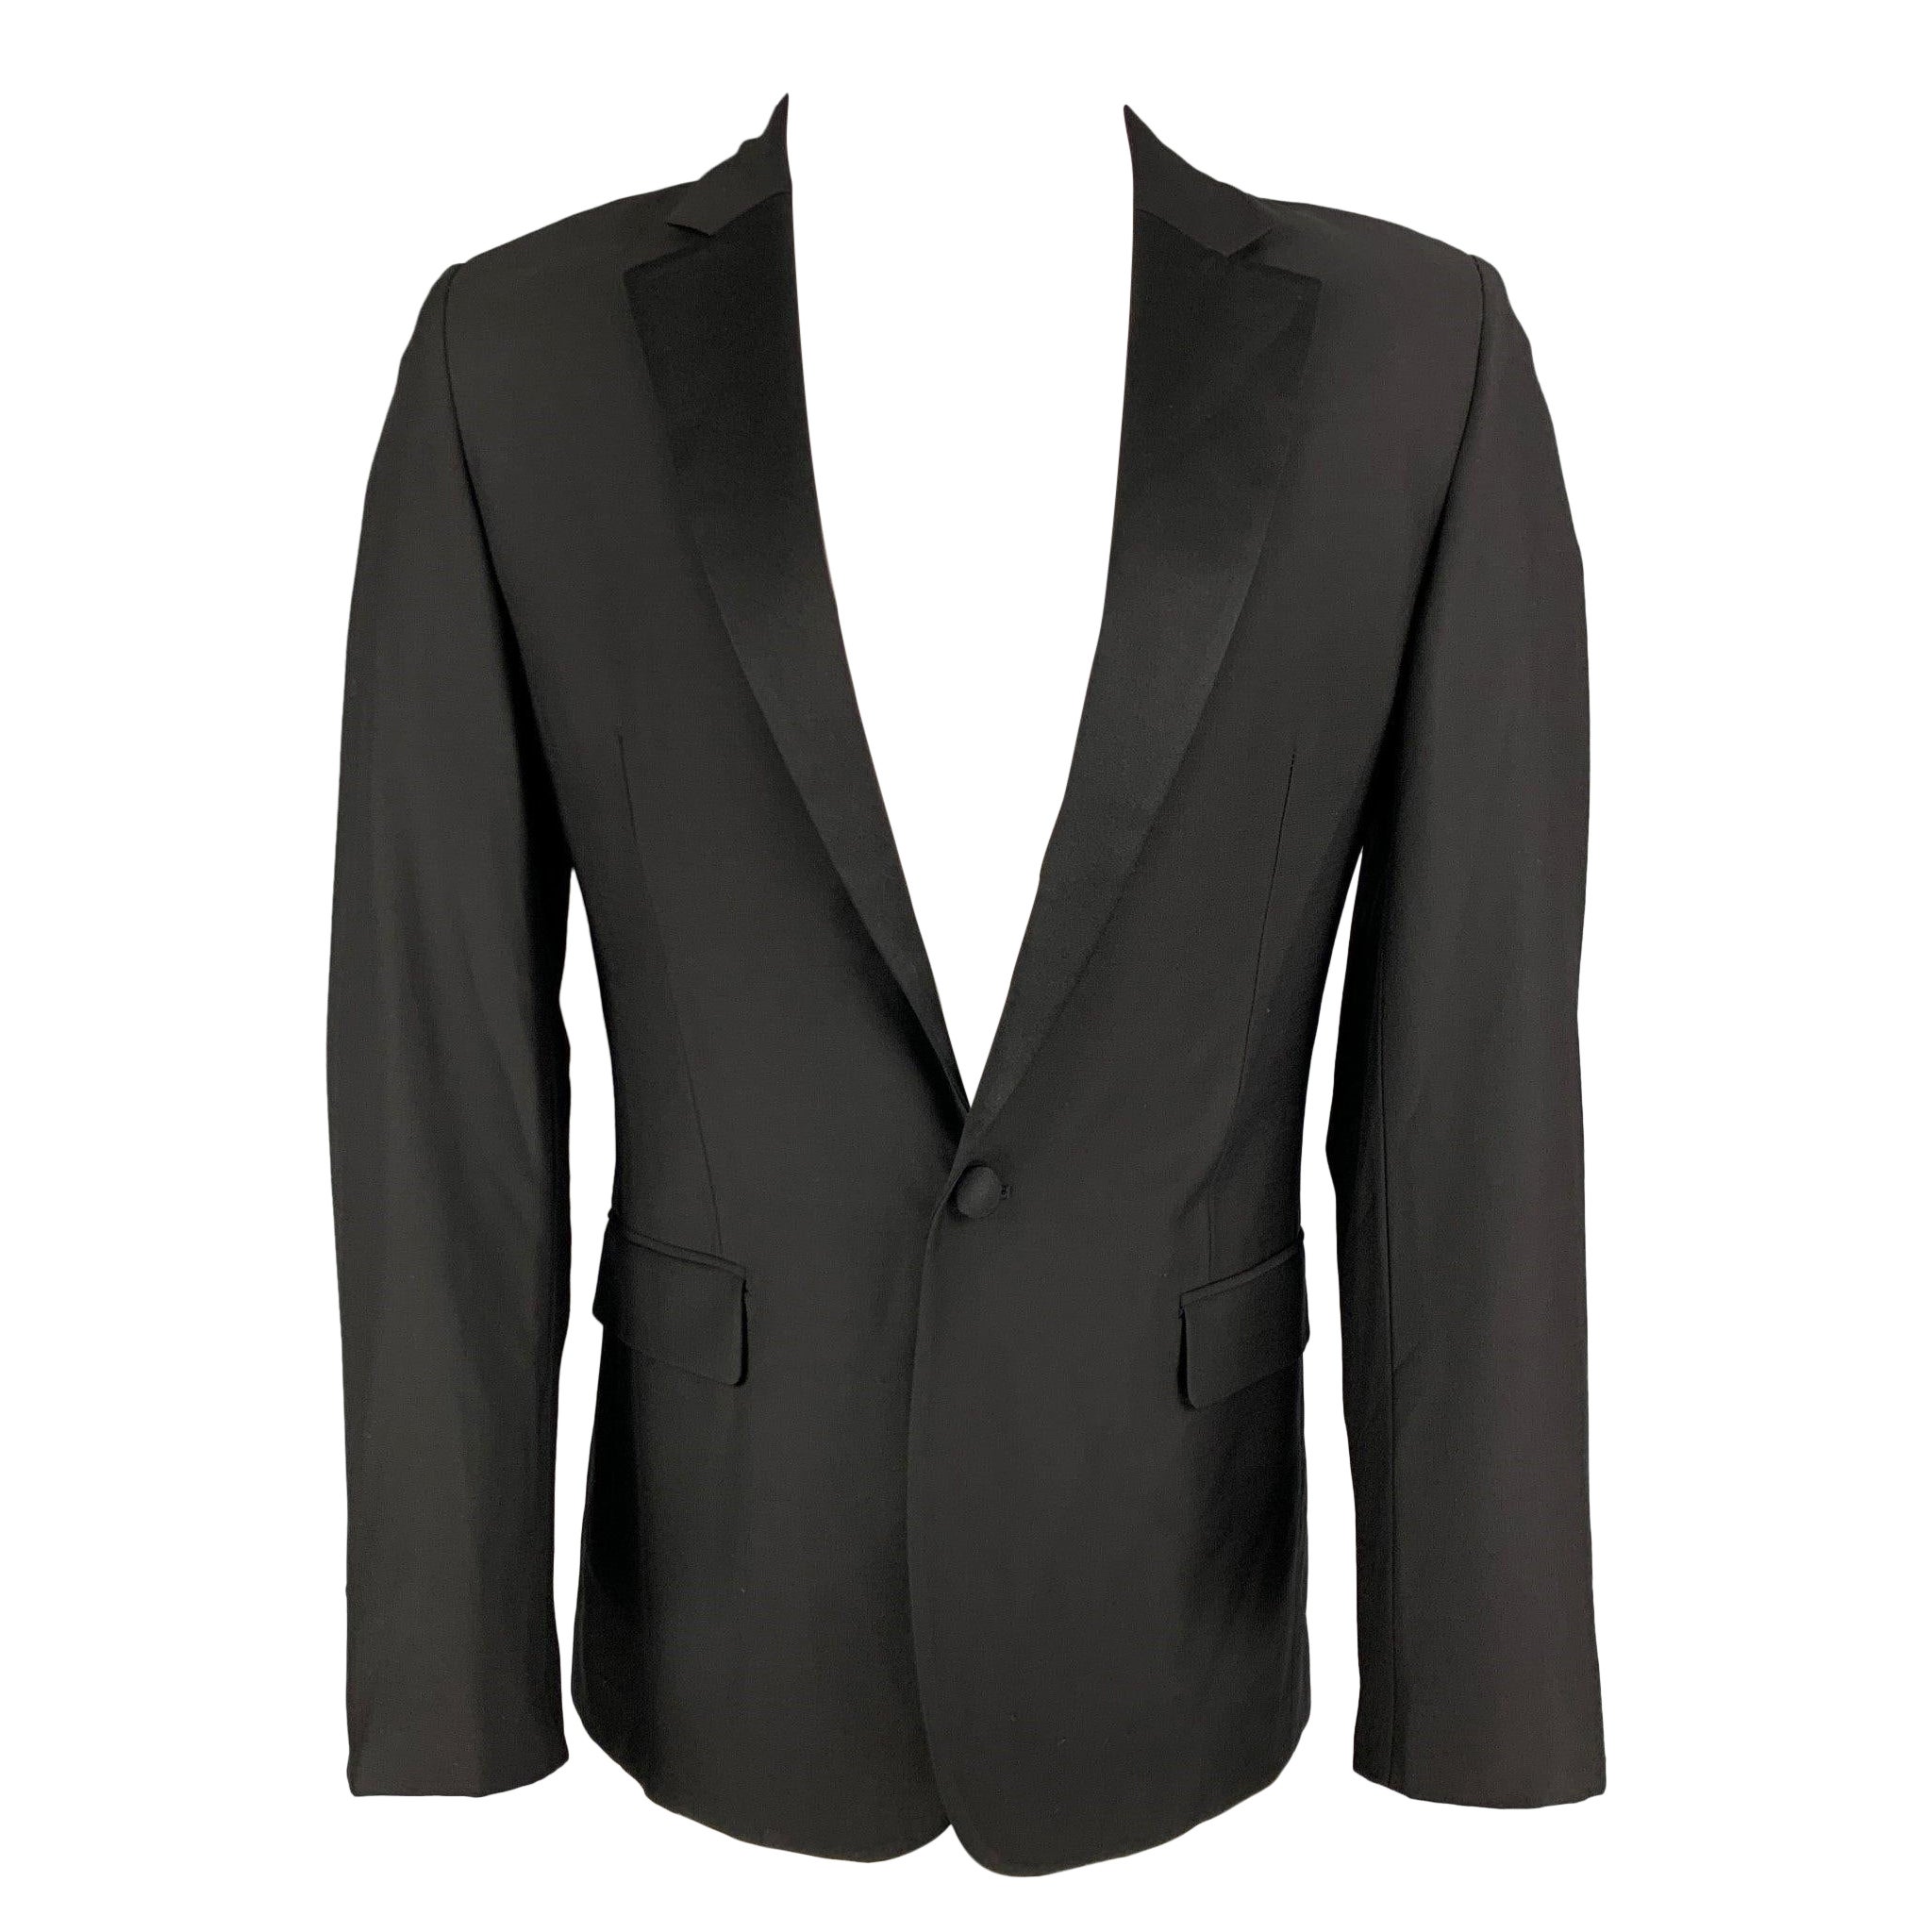 CALVIN KLEIN COLLECTION Size 38 Black Wool Tuxedo Sport Coat For Sale